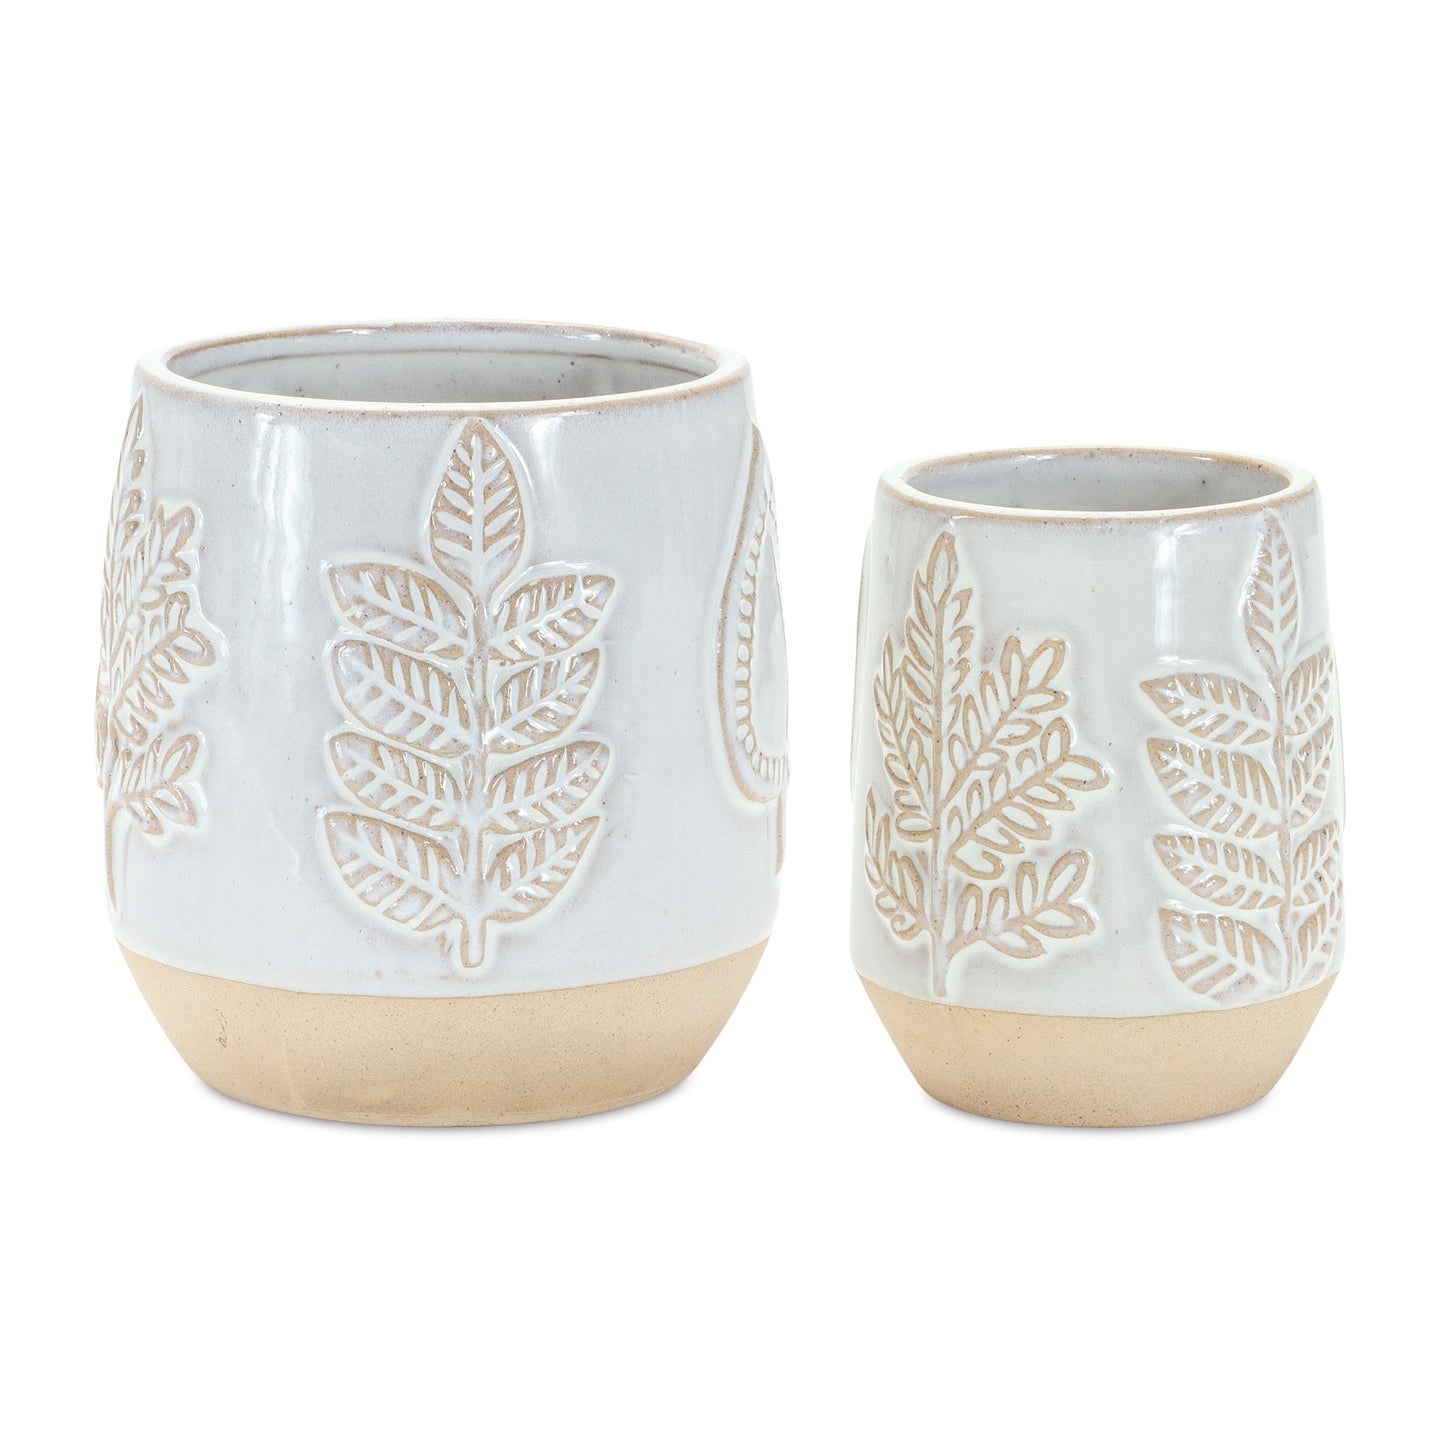 Two Tone Porcelain Planter with Leaf Design (Set of 2)